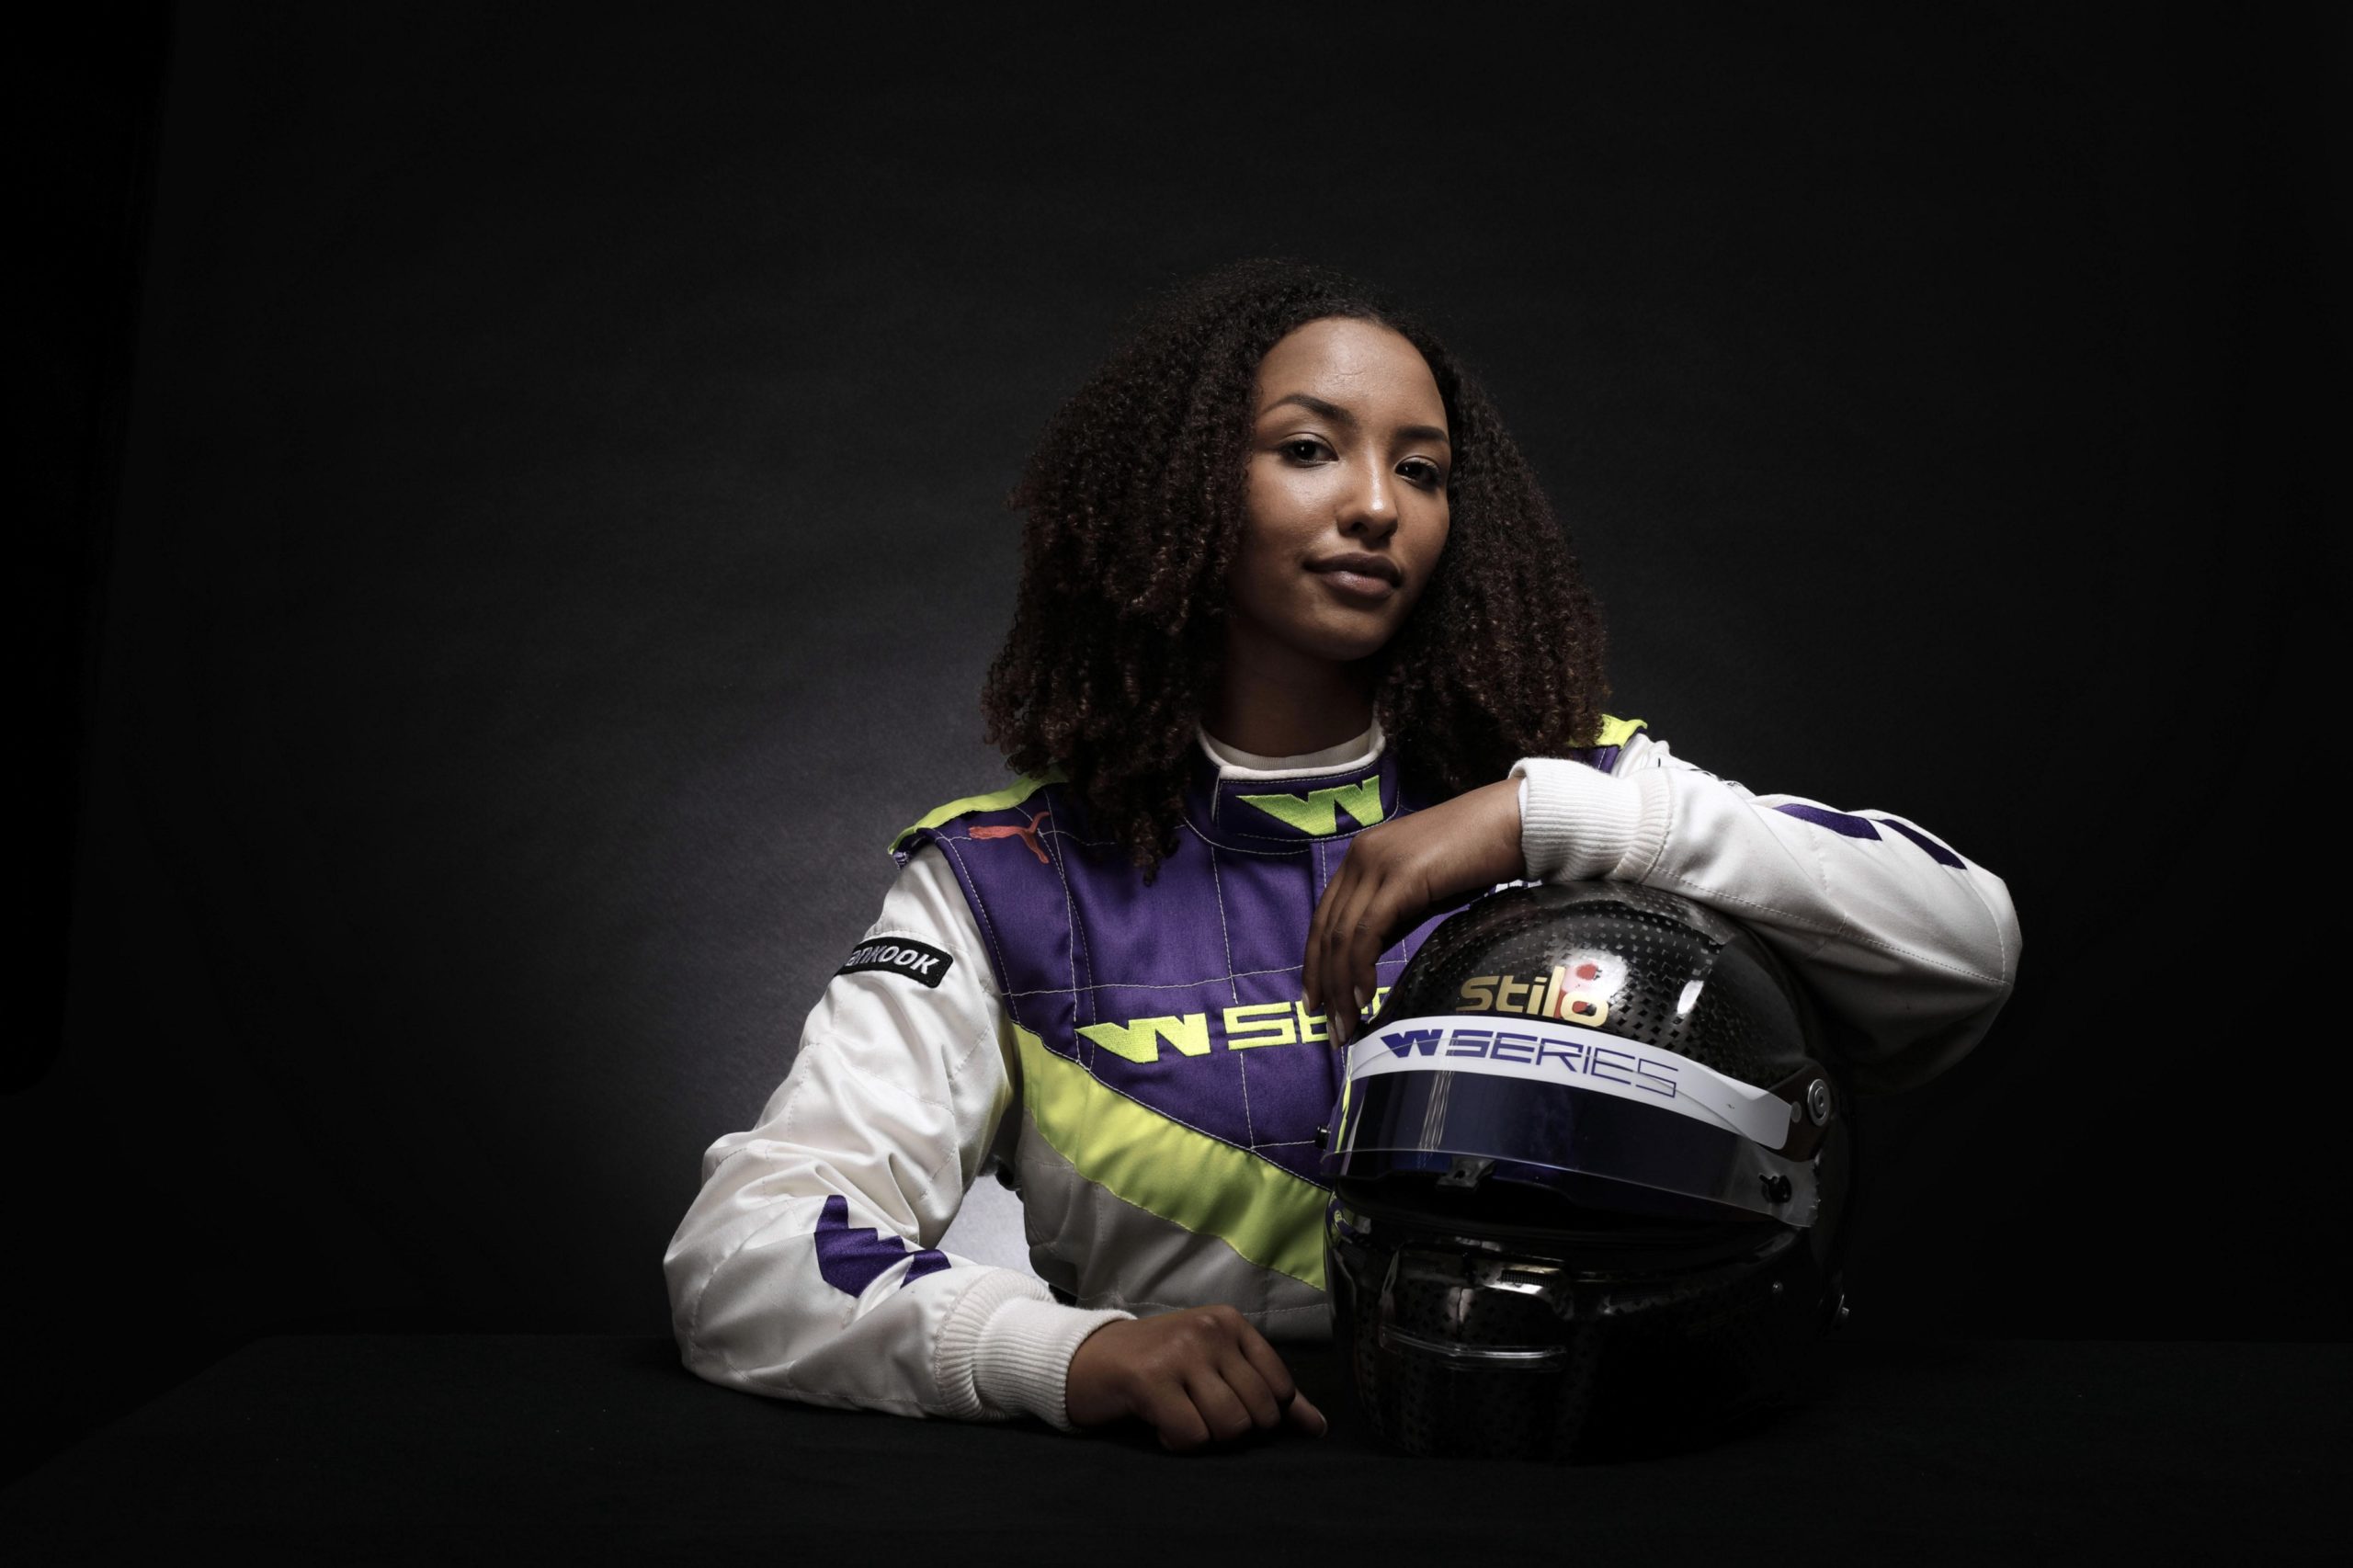 W-Series Driver Naomi Schiff Is Bringing Black Girl Magic To The Motorsport Industry [@naomischiff]